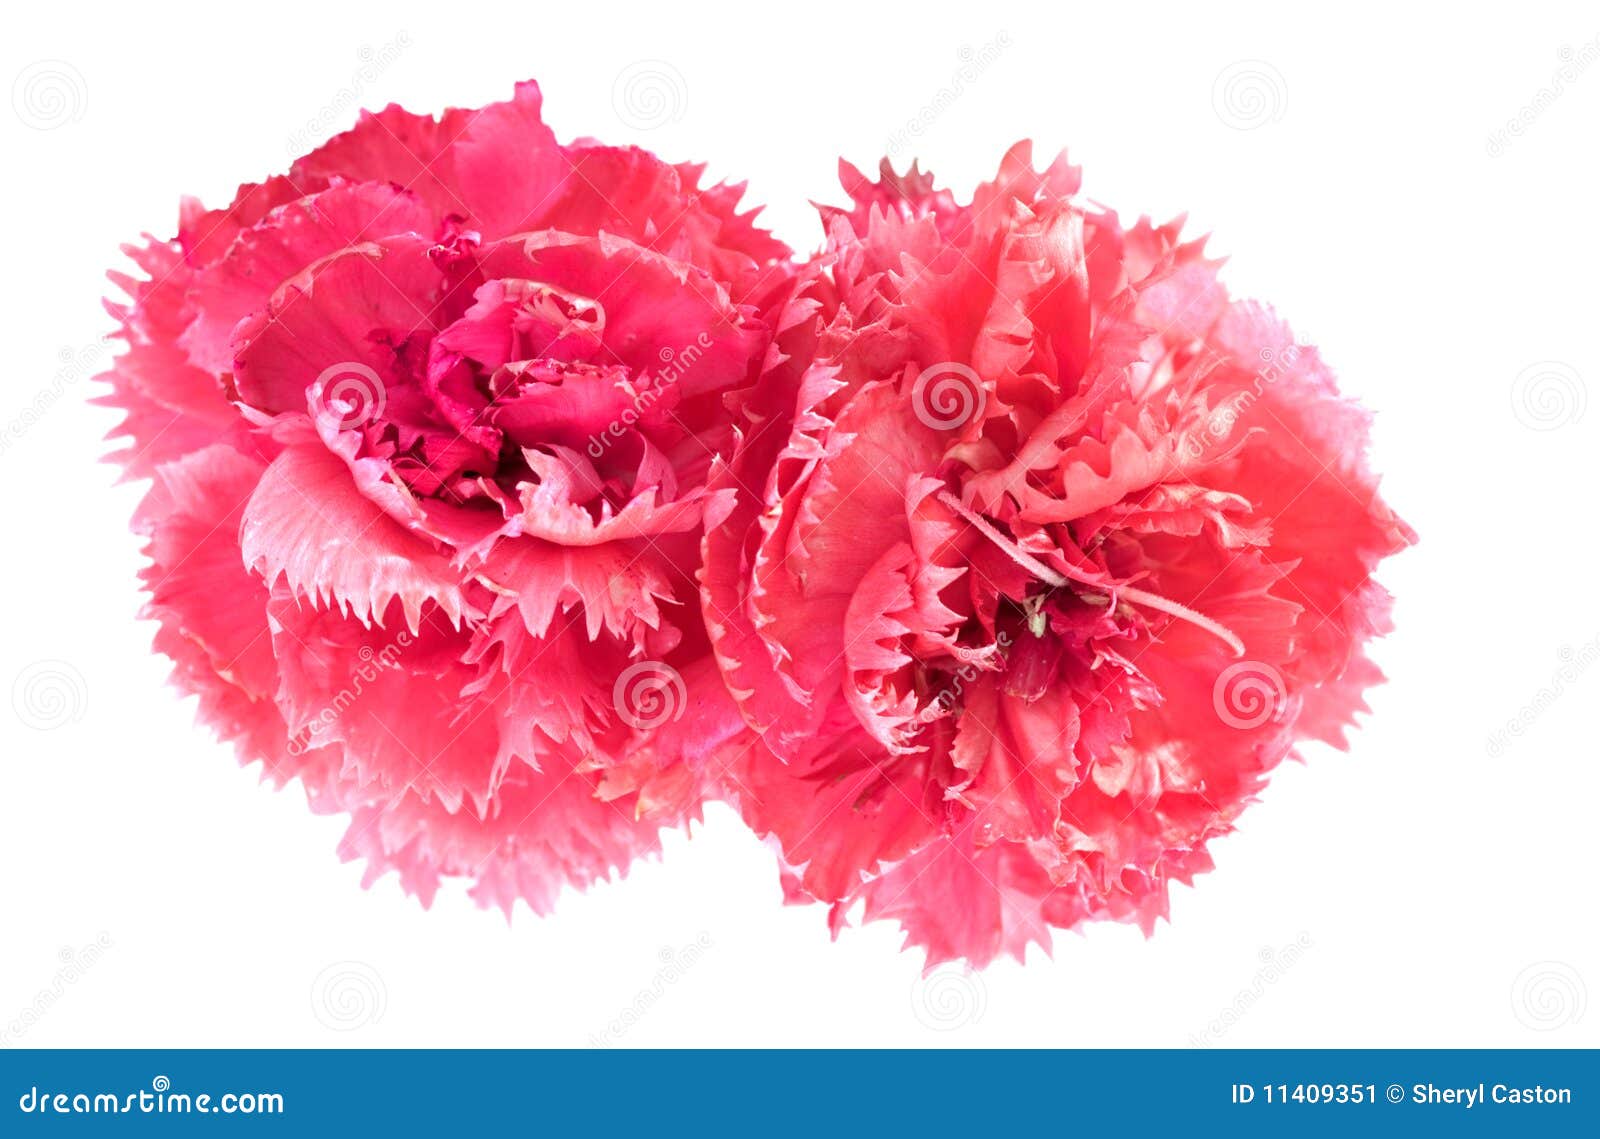 pink carnation flowers dianthus caryophyllus